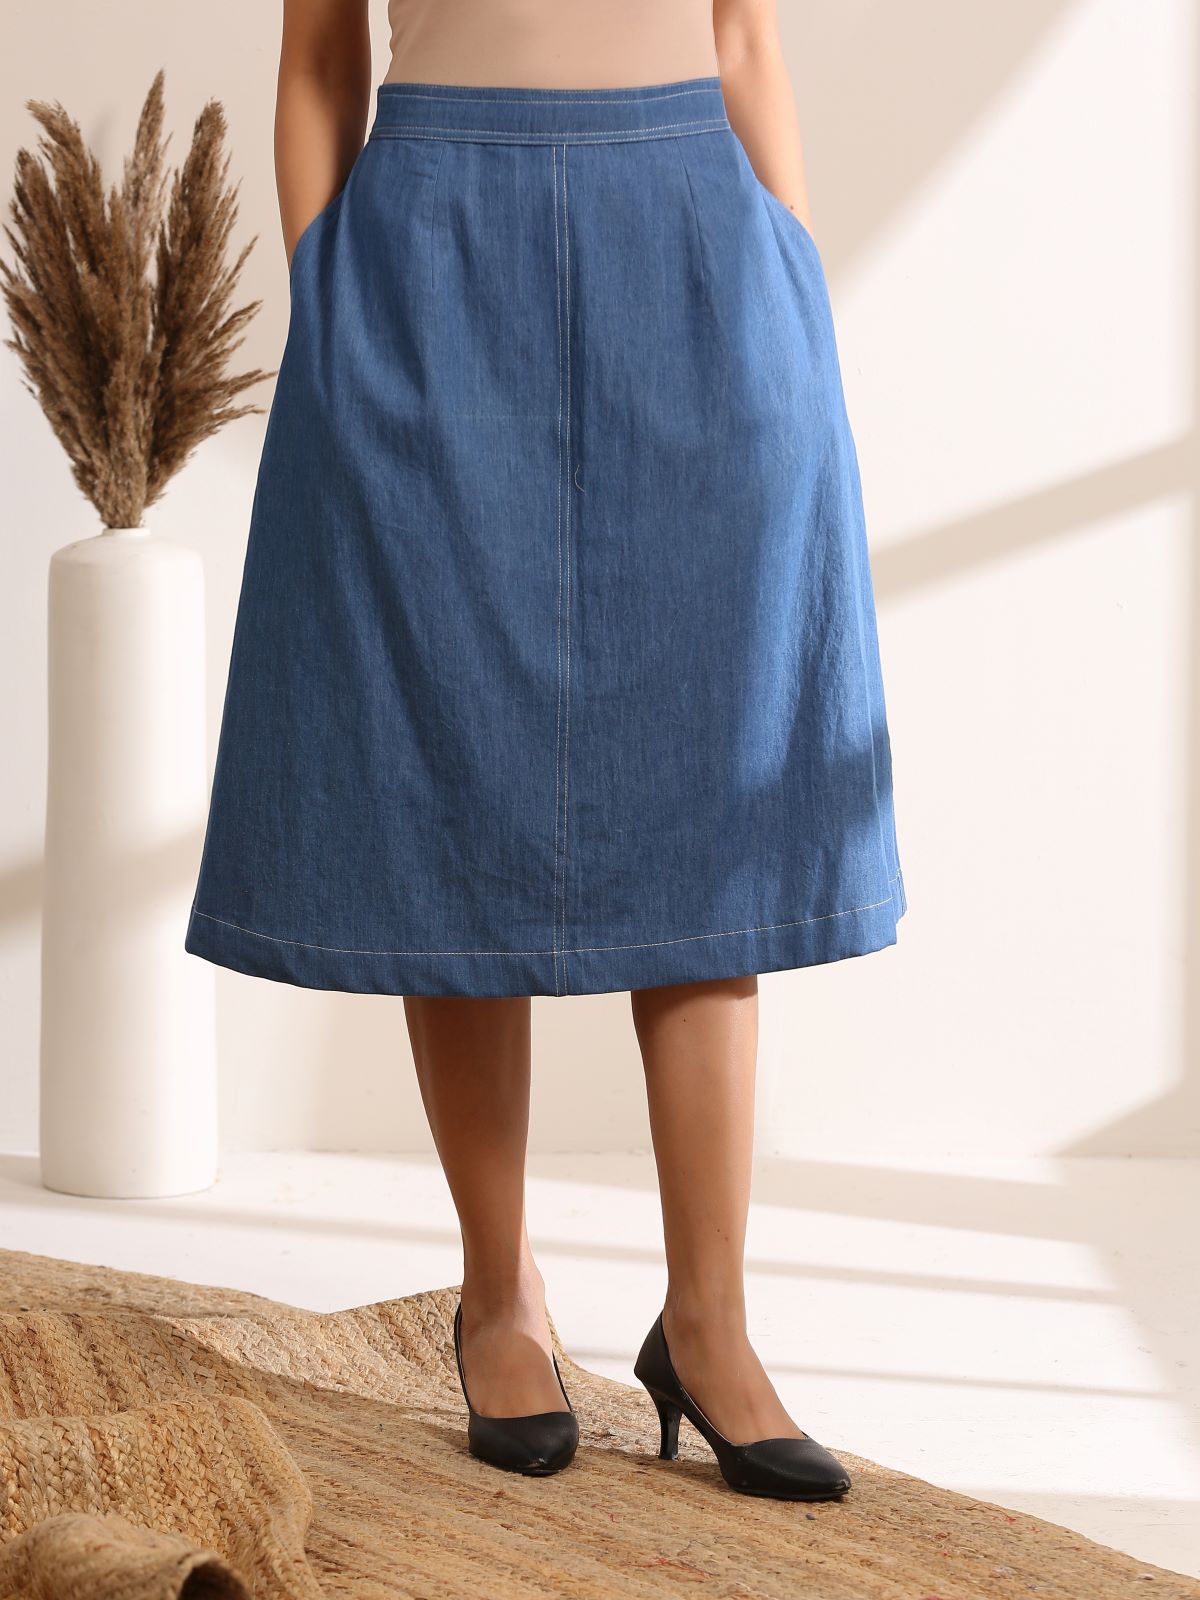 Basic - Light denim skirt with white stitching details